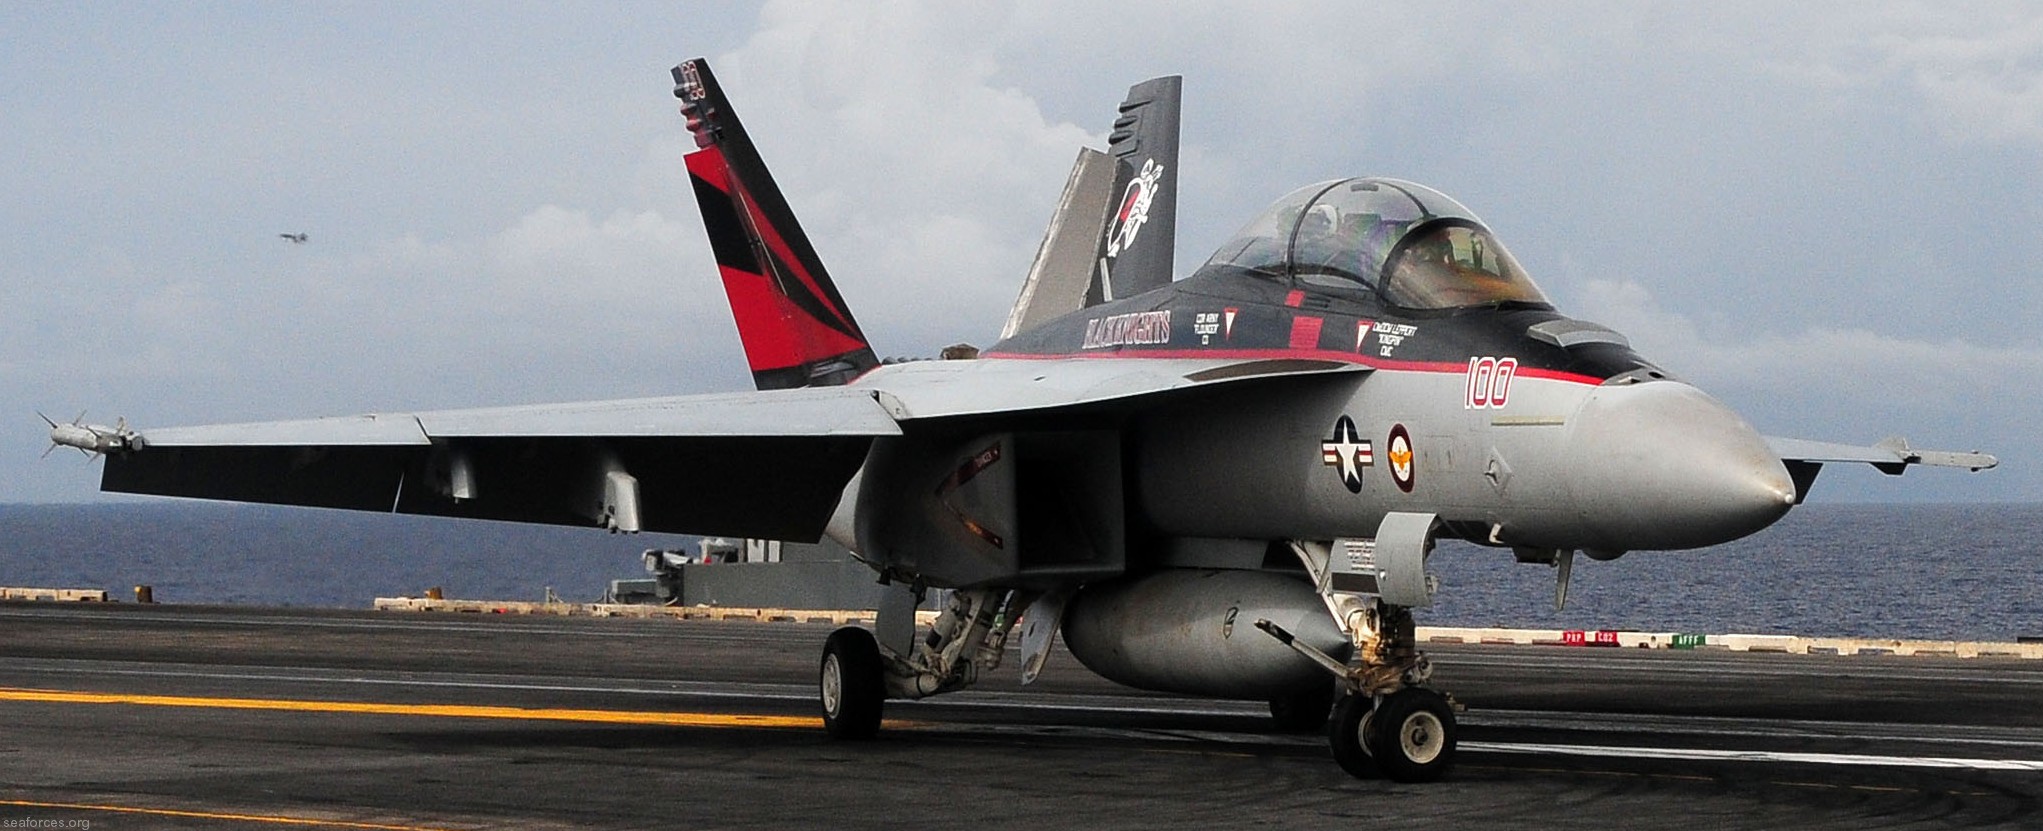 vfa-154 black knights strike fighter squadron navy f/a-18f super hornet carrier air wing cvw-14 uss ronald reagan cvn-76 94